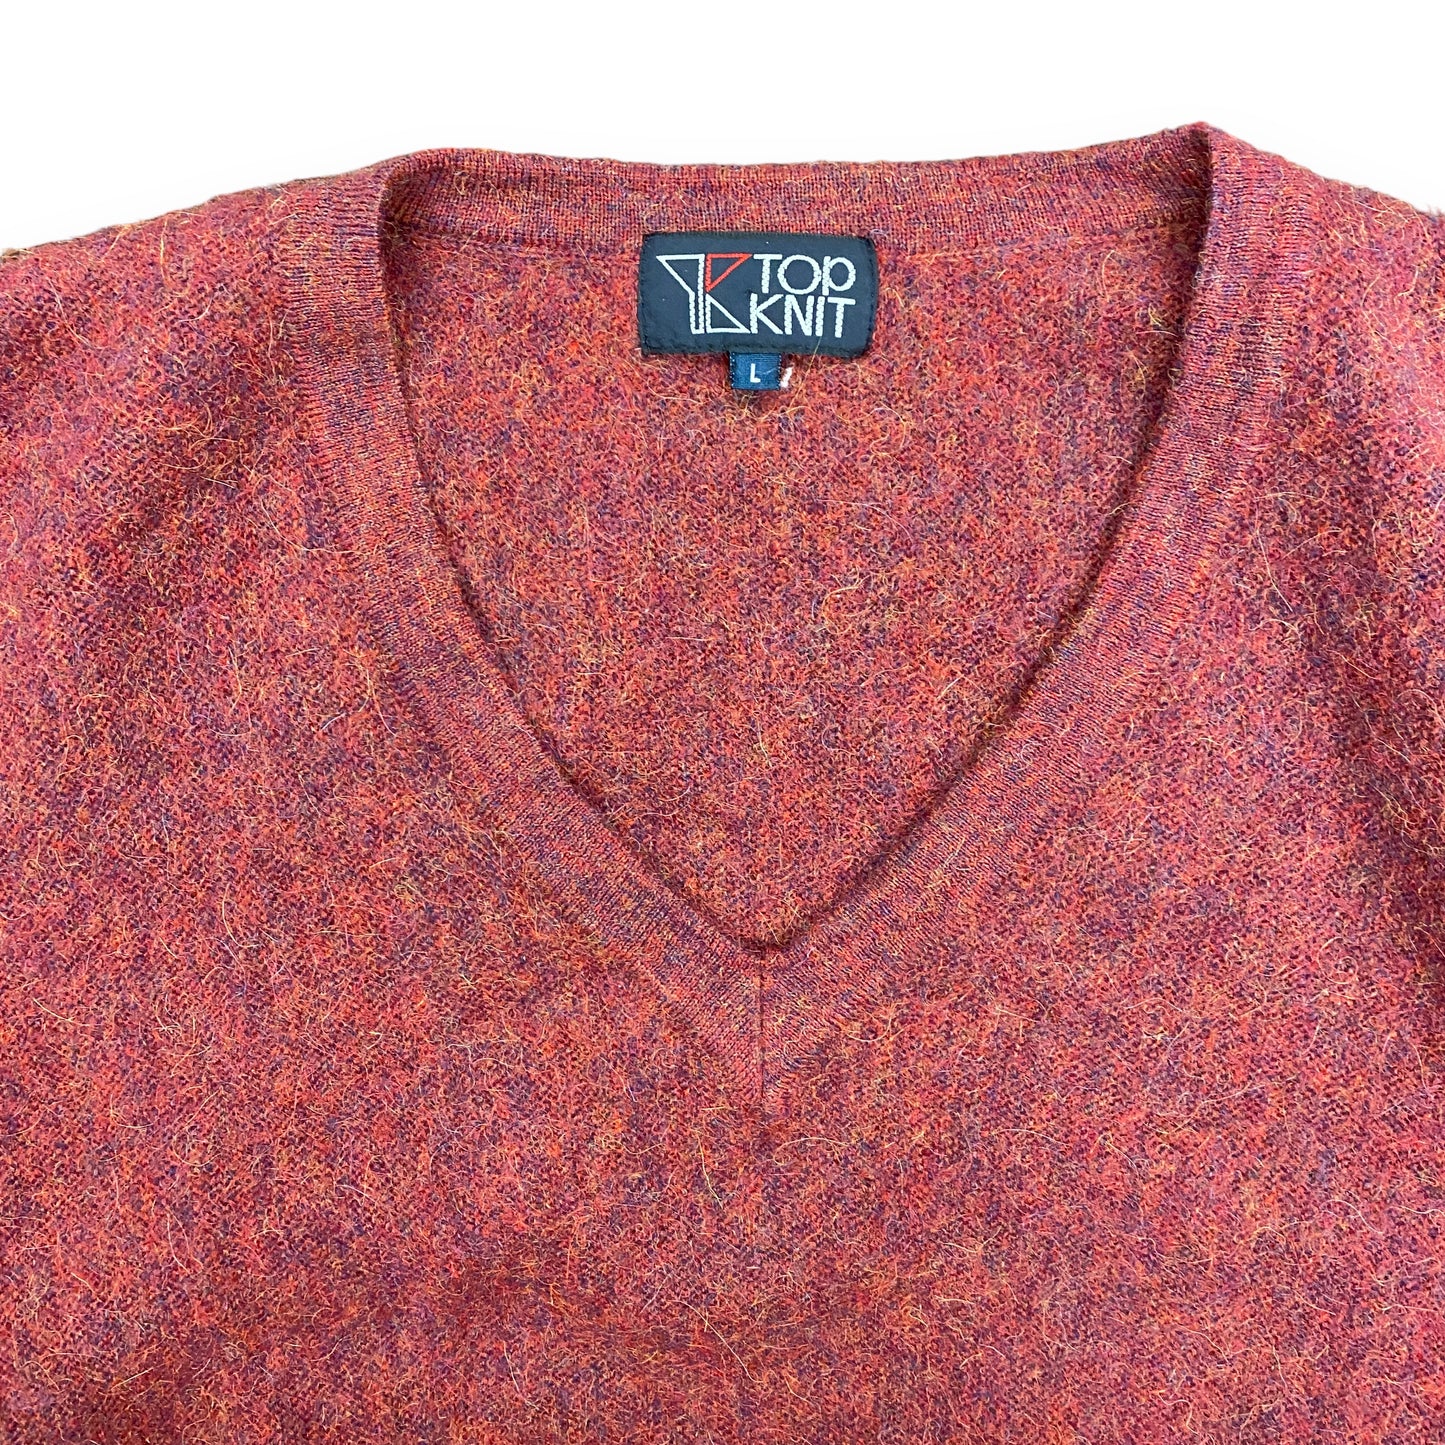 Vintage 1980s Top Knit Alpaca Wool V-Neck Sweater - Size Large